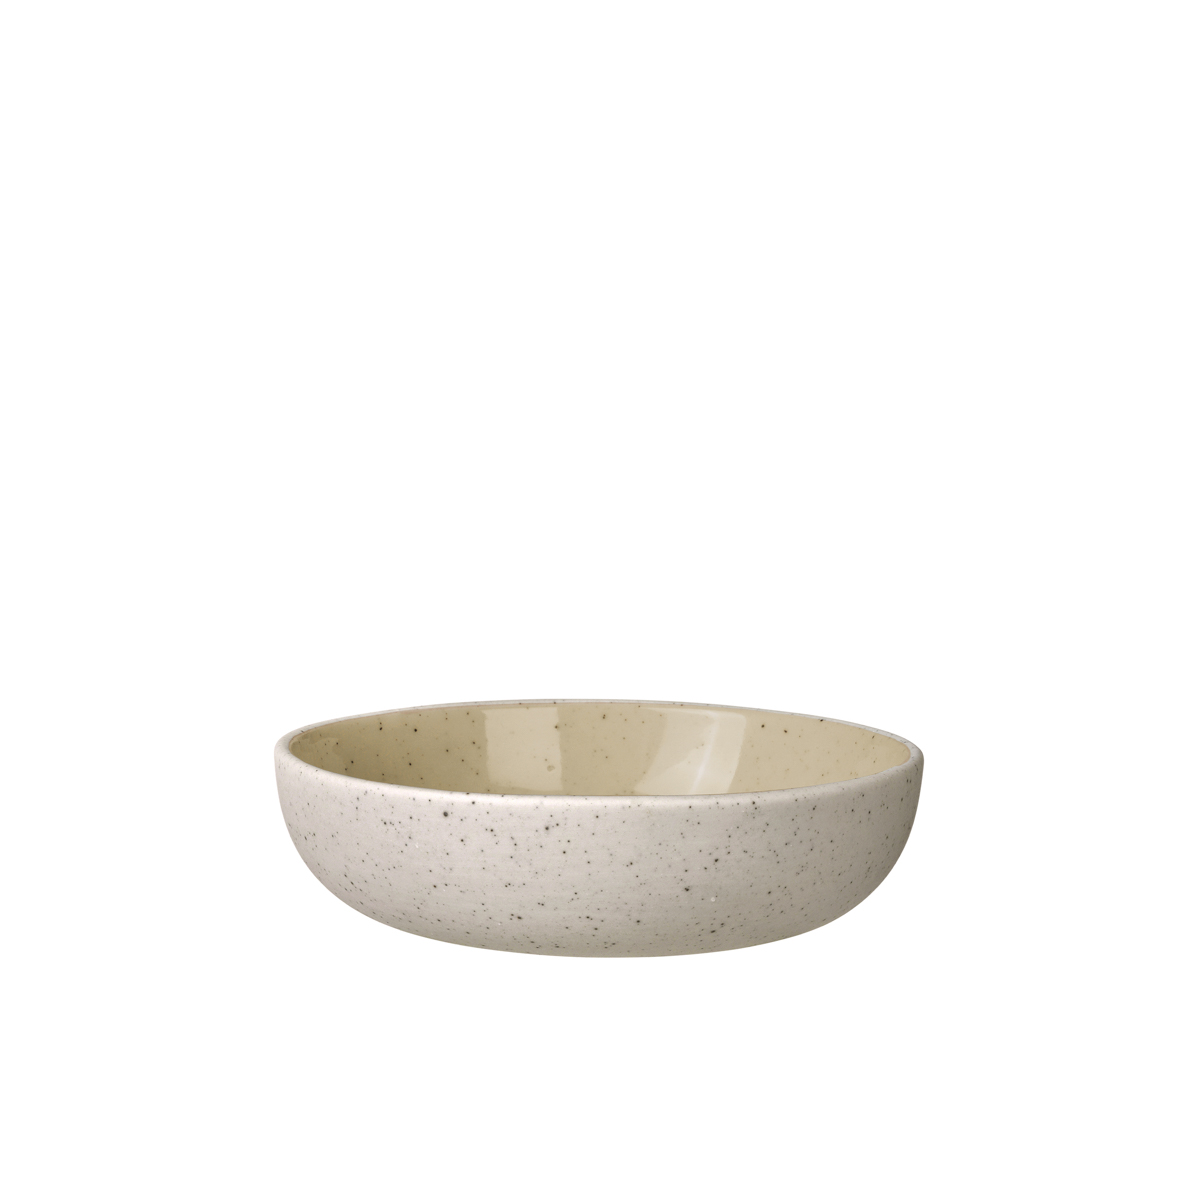 Snackschale -SABLO- Savannah 80 ml, Ø 10 cm. Material: Keramik. Von Blomus.